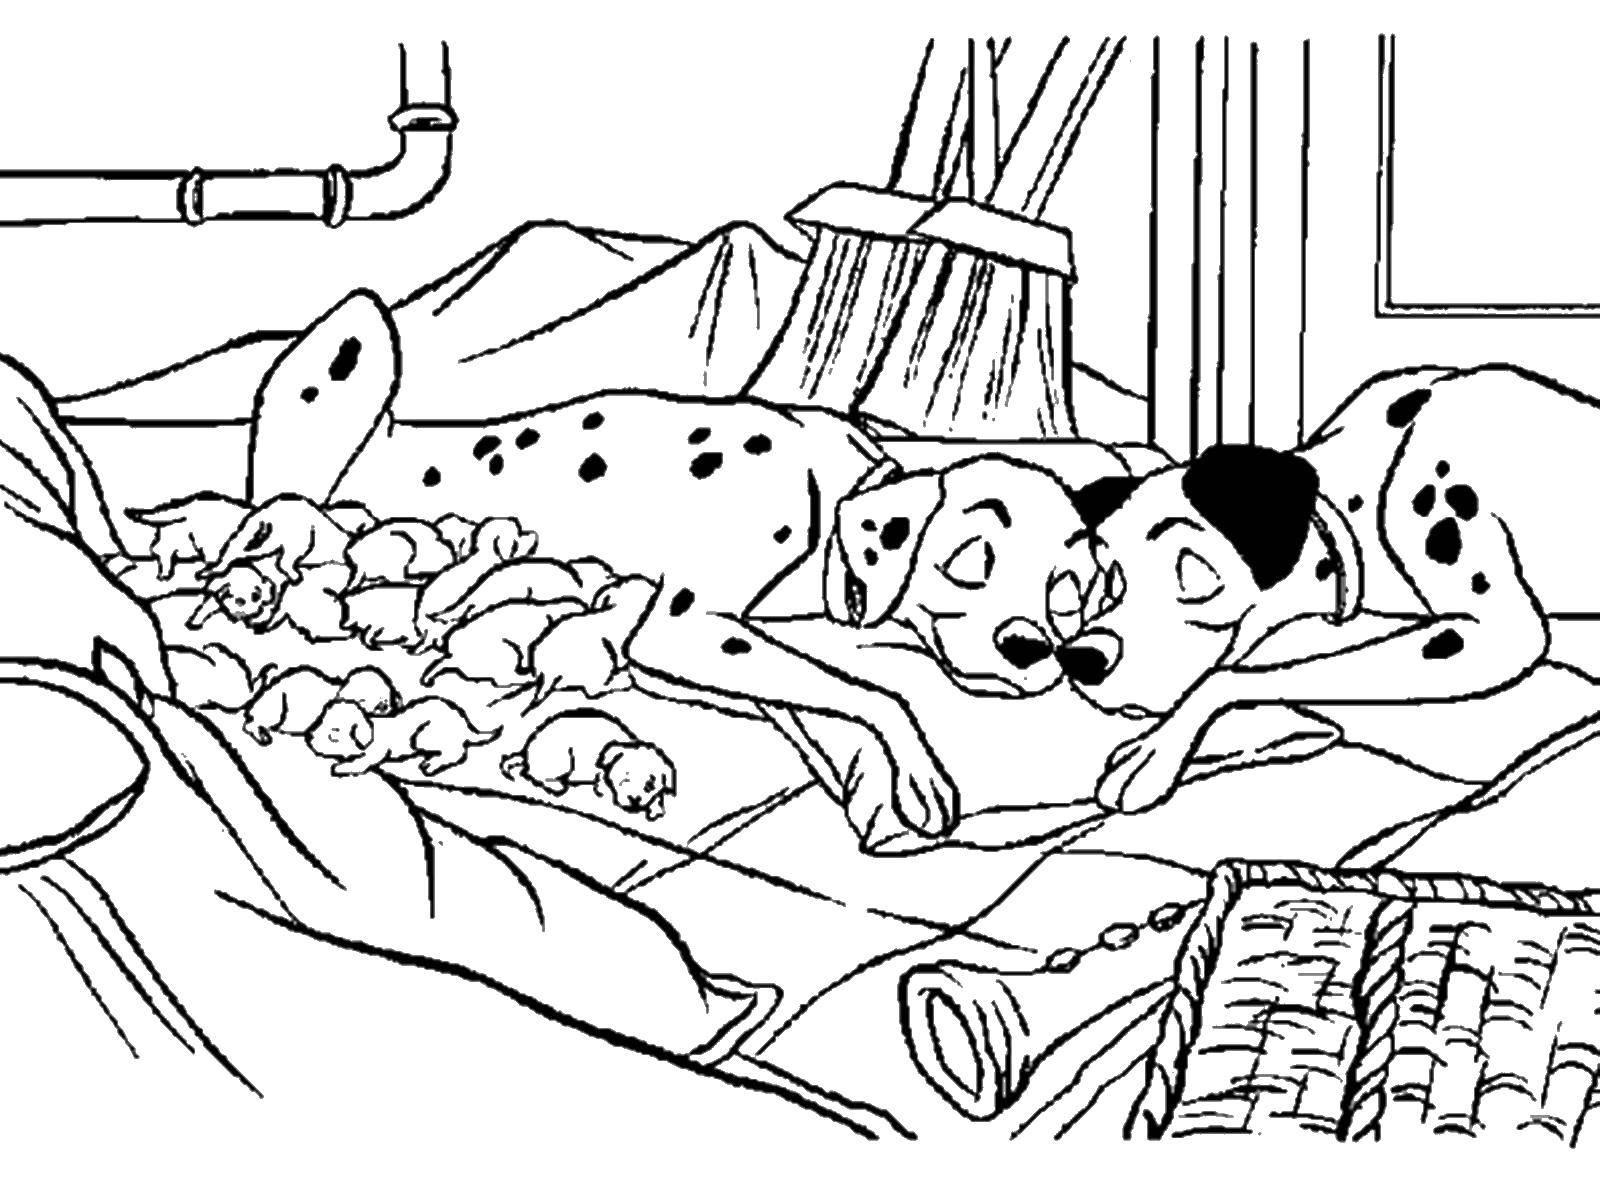 Coloring Family Dalmatians. Category 101 Dalmatians. Tags:  101 Dalmatians, Disney, cartoon.